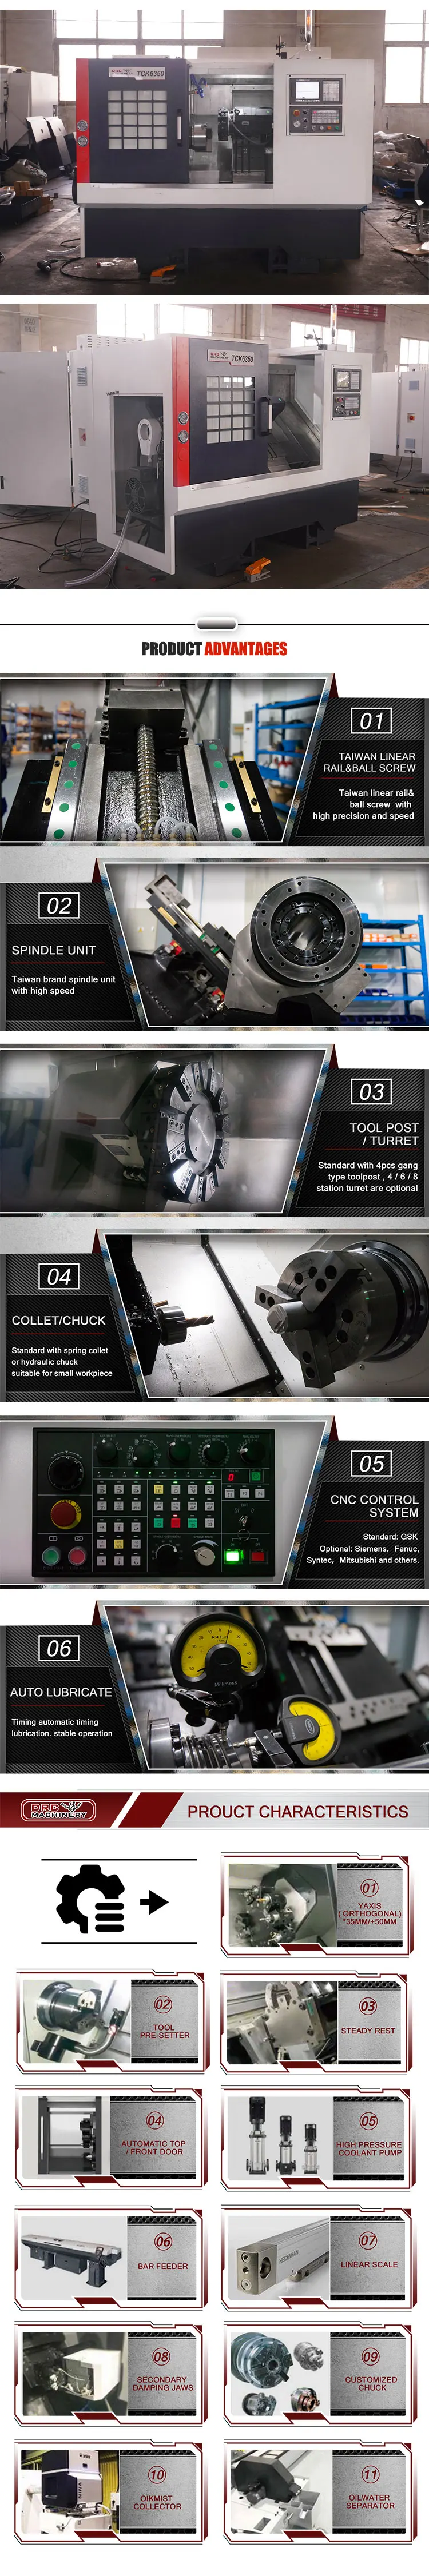 TCK6350 Tour Machine GSK CNC System 45 Degrees Slant Bed CNC Metal Turning Lathe Machine With Live Tool